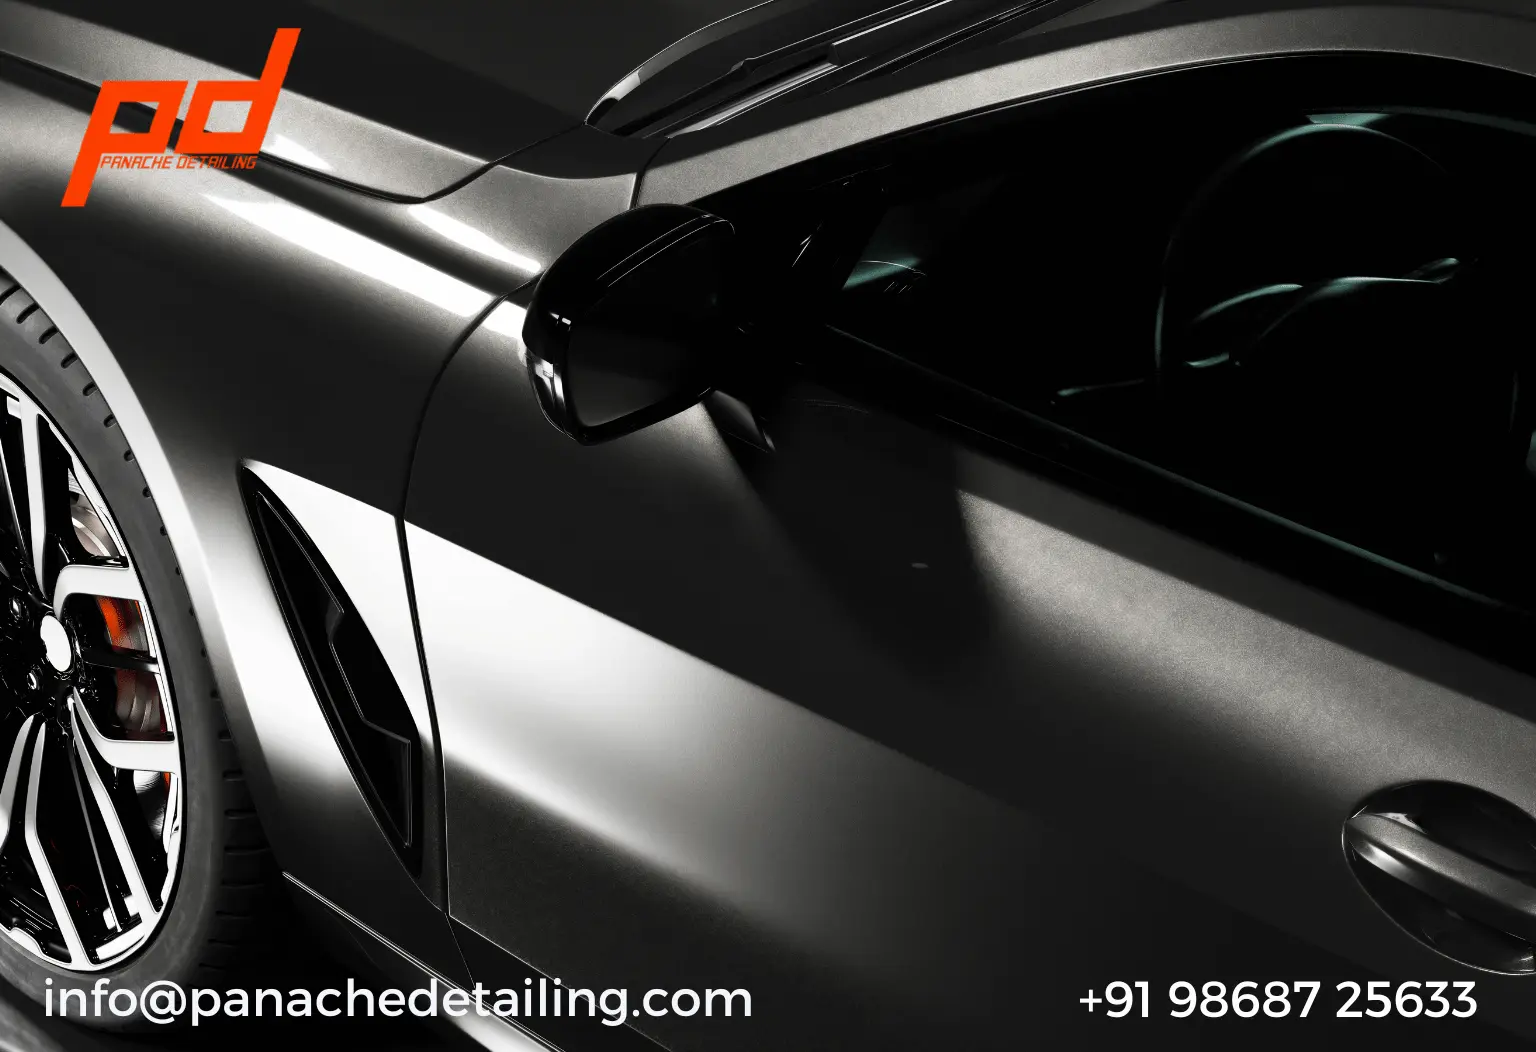 Car Detailing Services by Panache Detailing